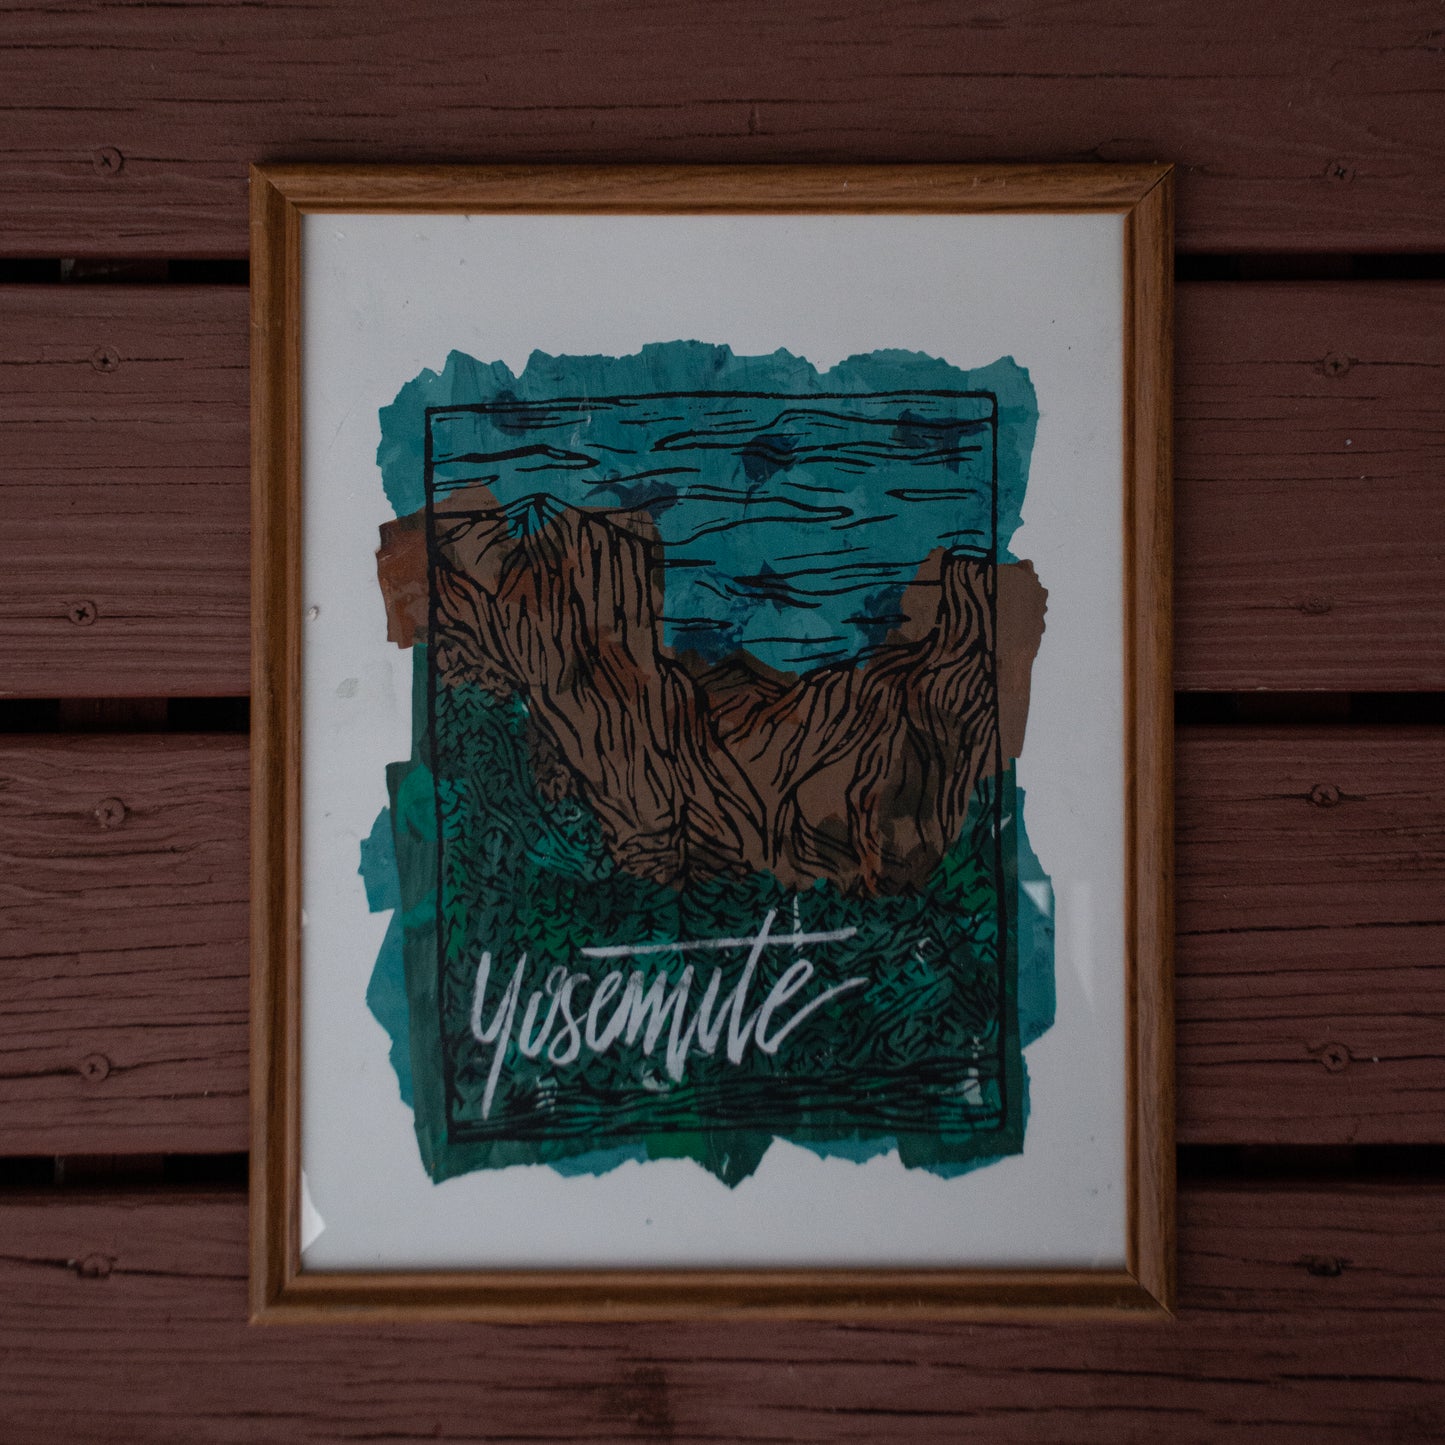 Yosemite thin wood frame